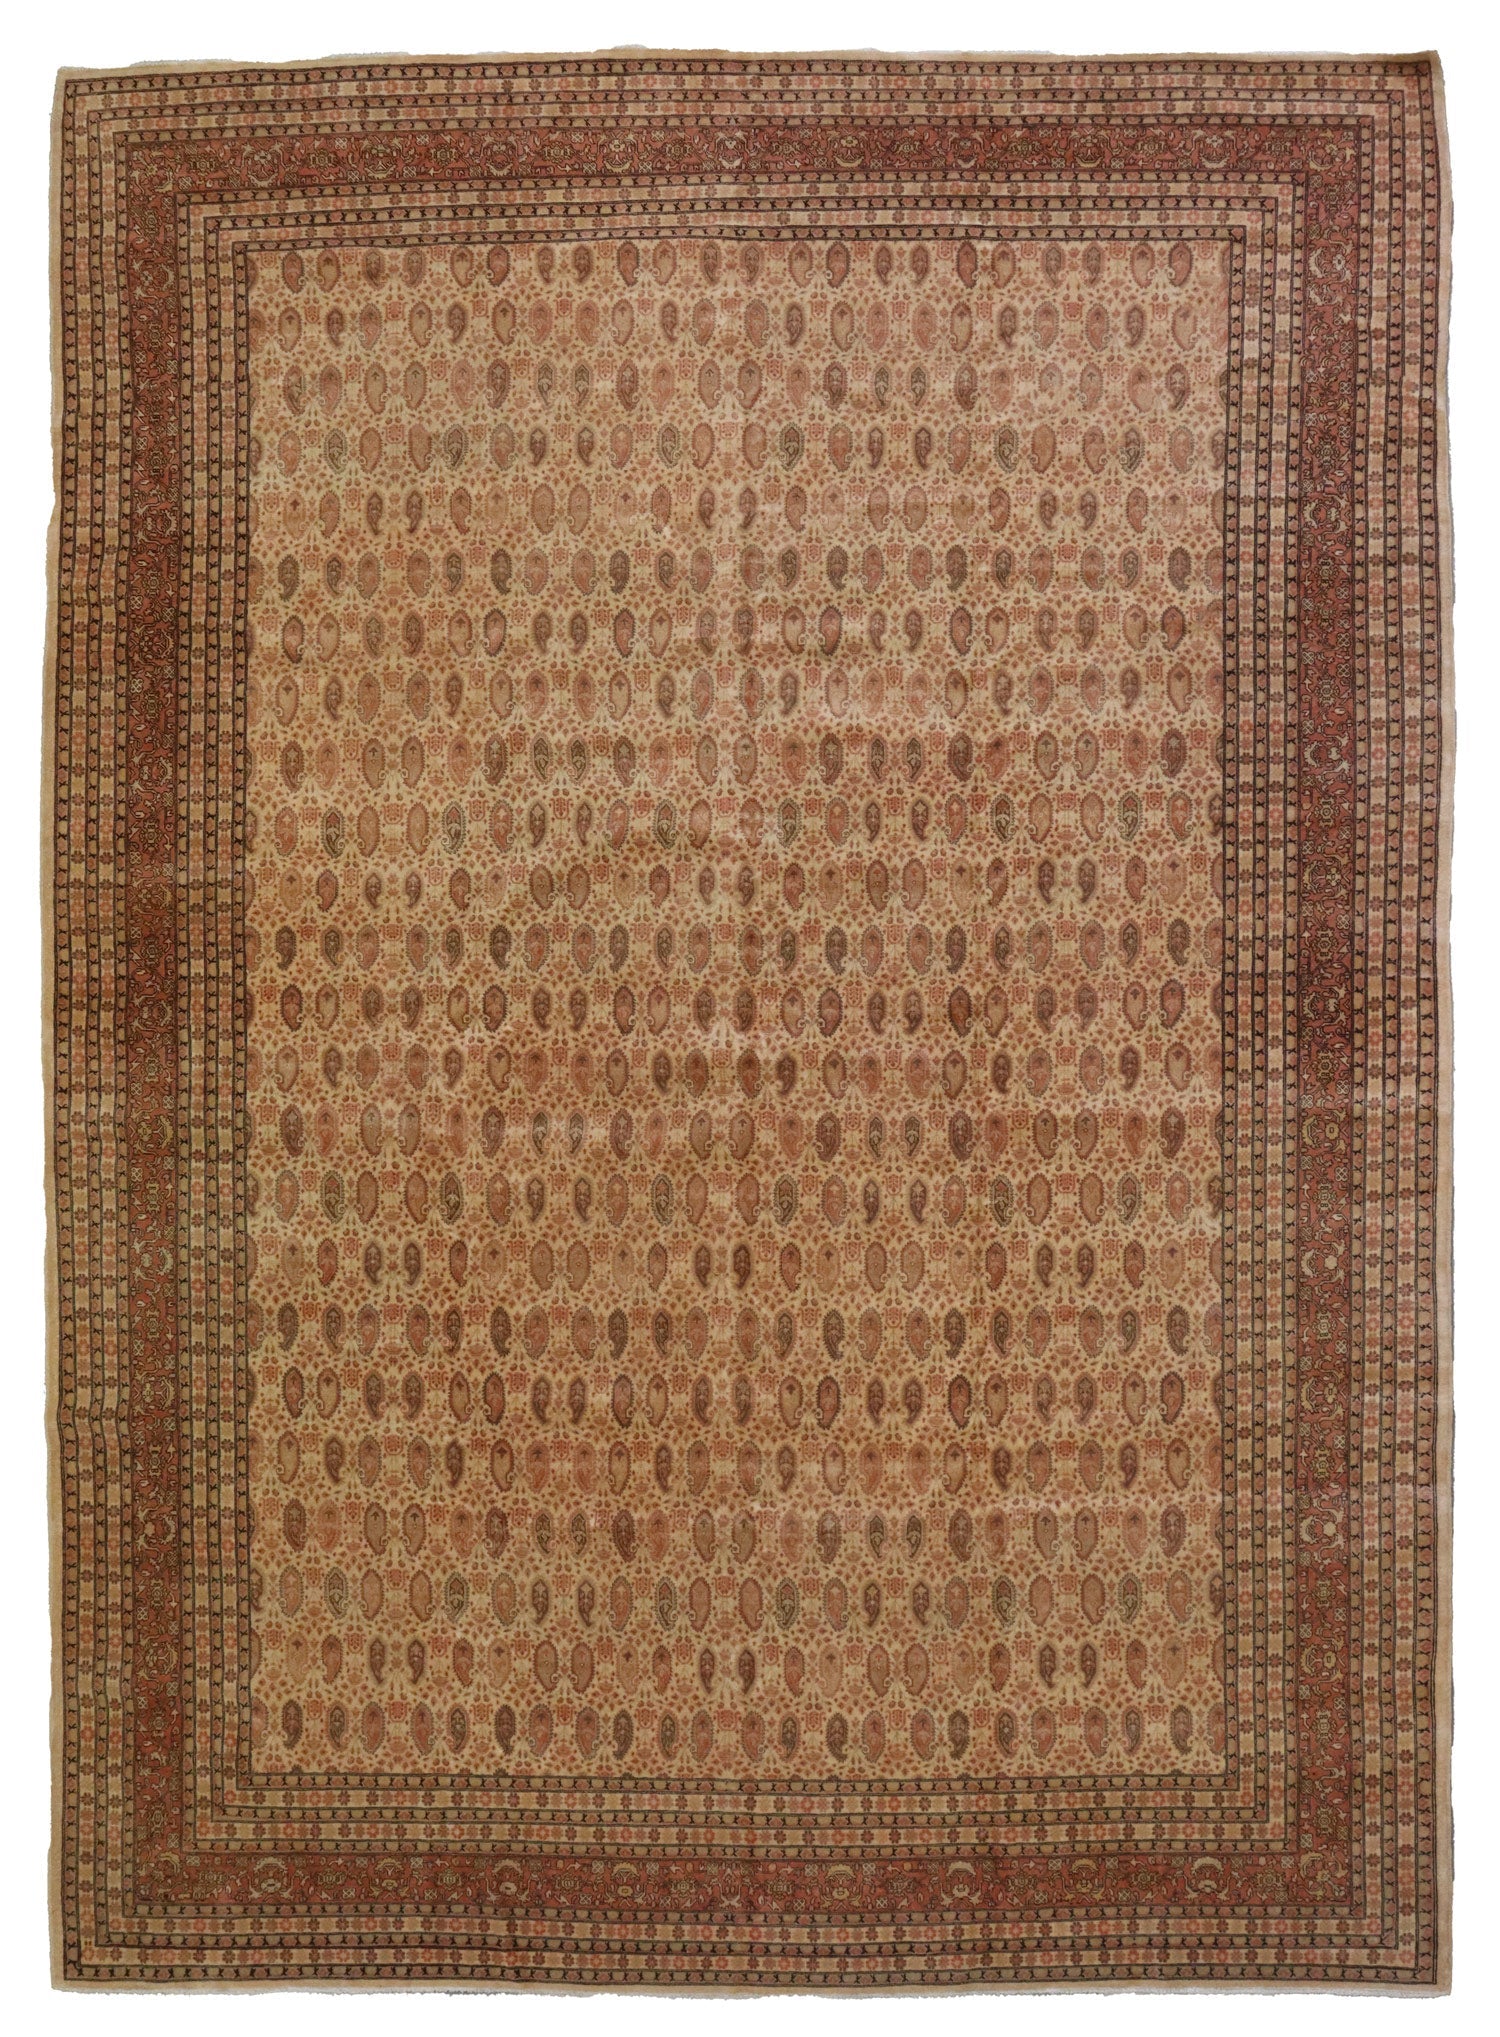 Antique Hereke Handwoven Traditional Rug